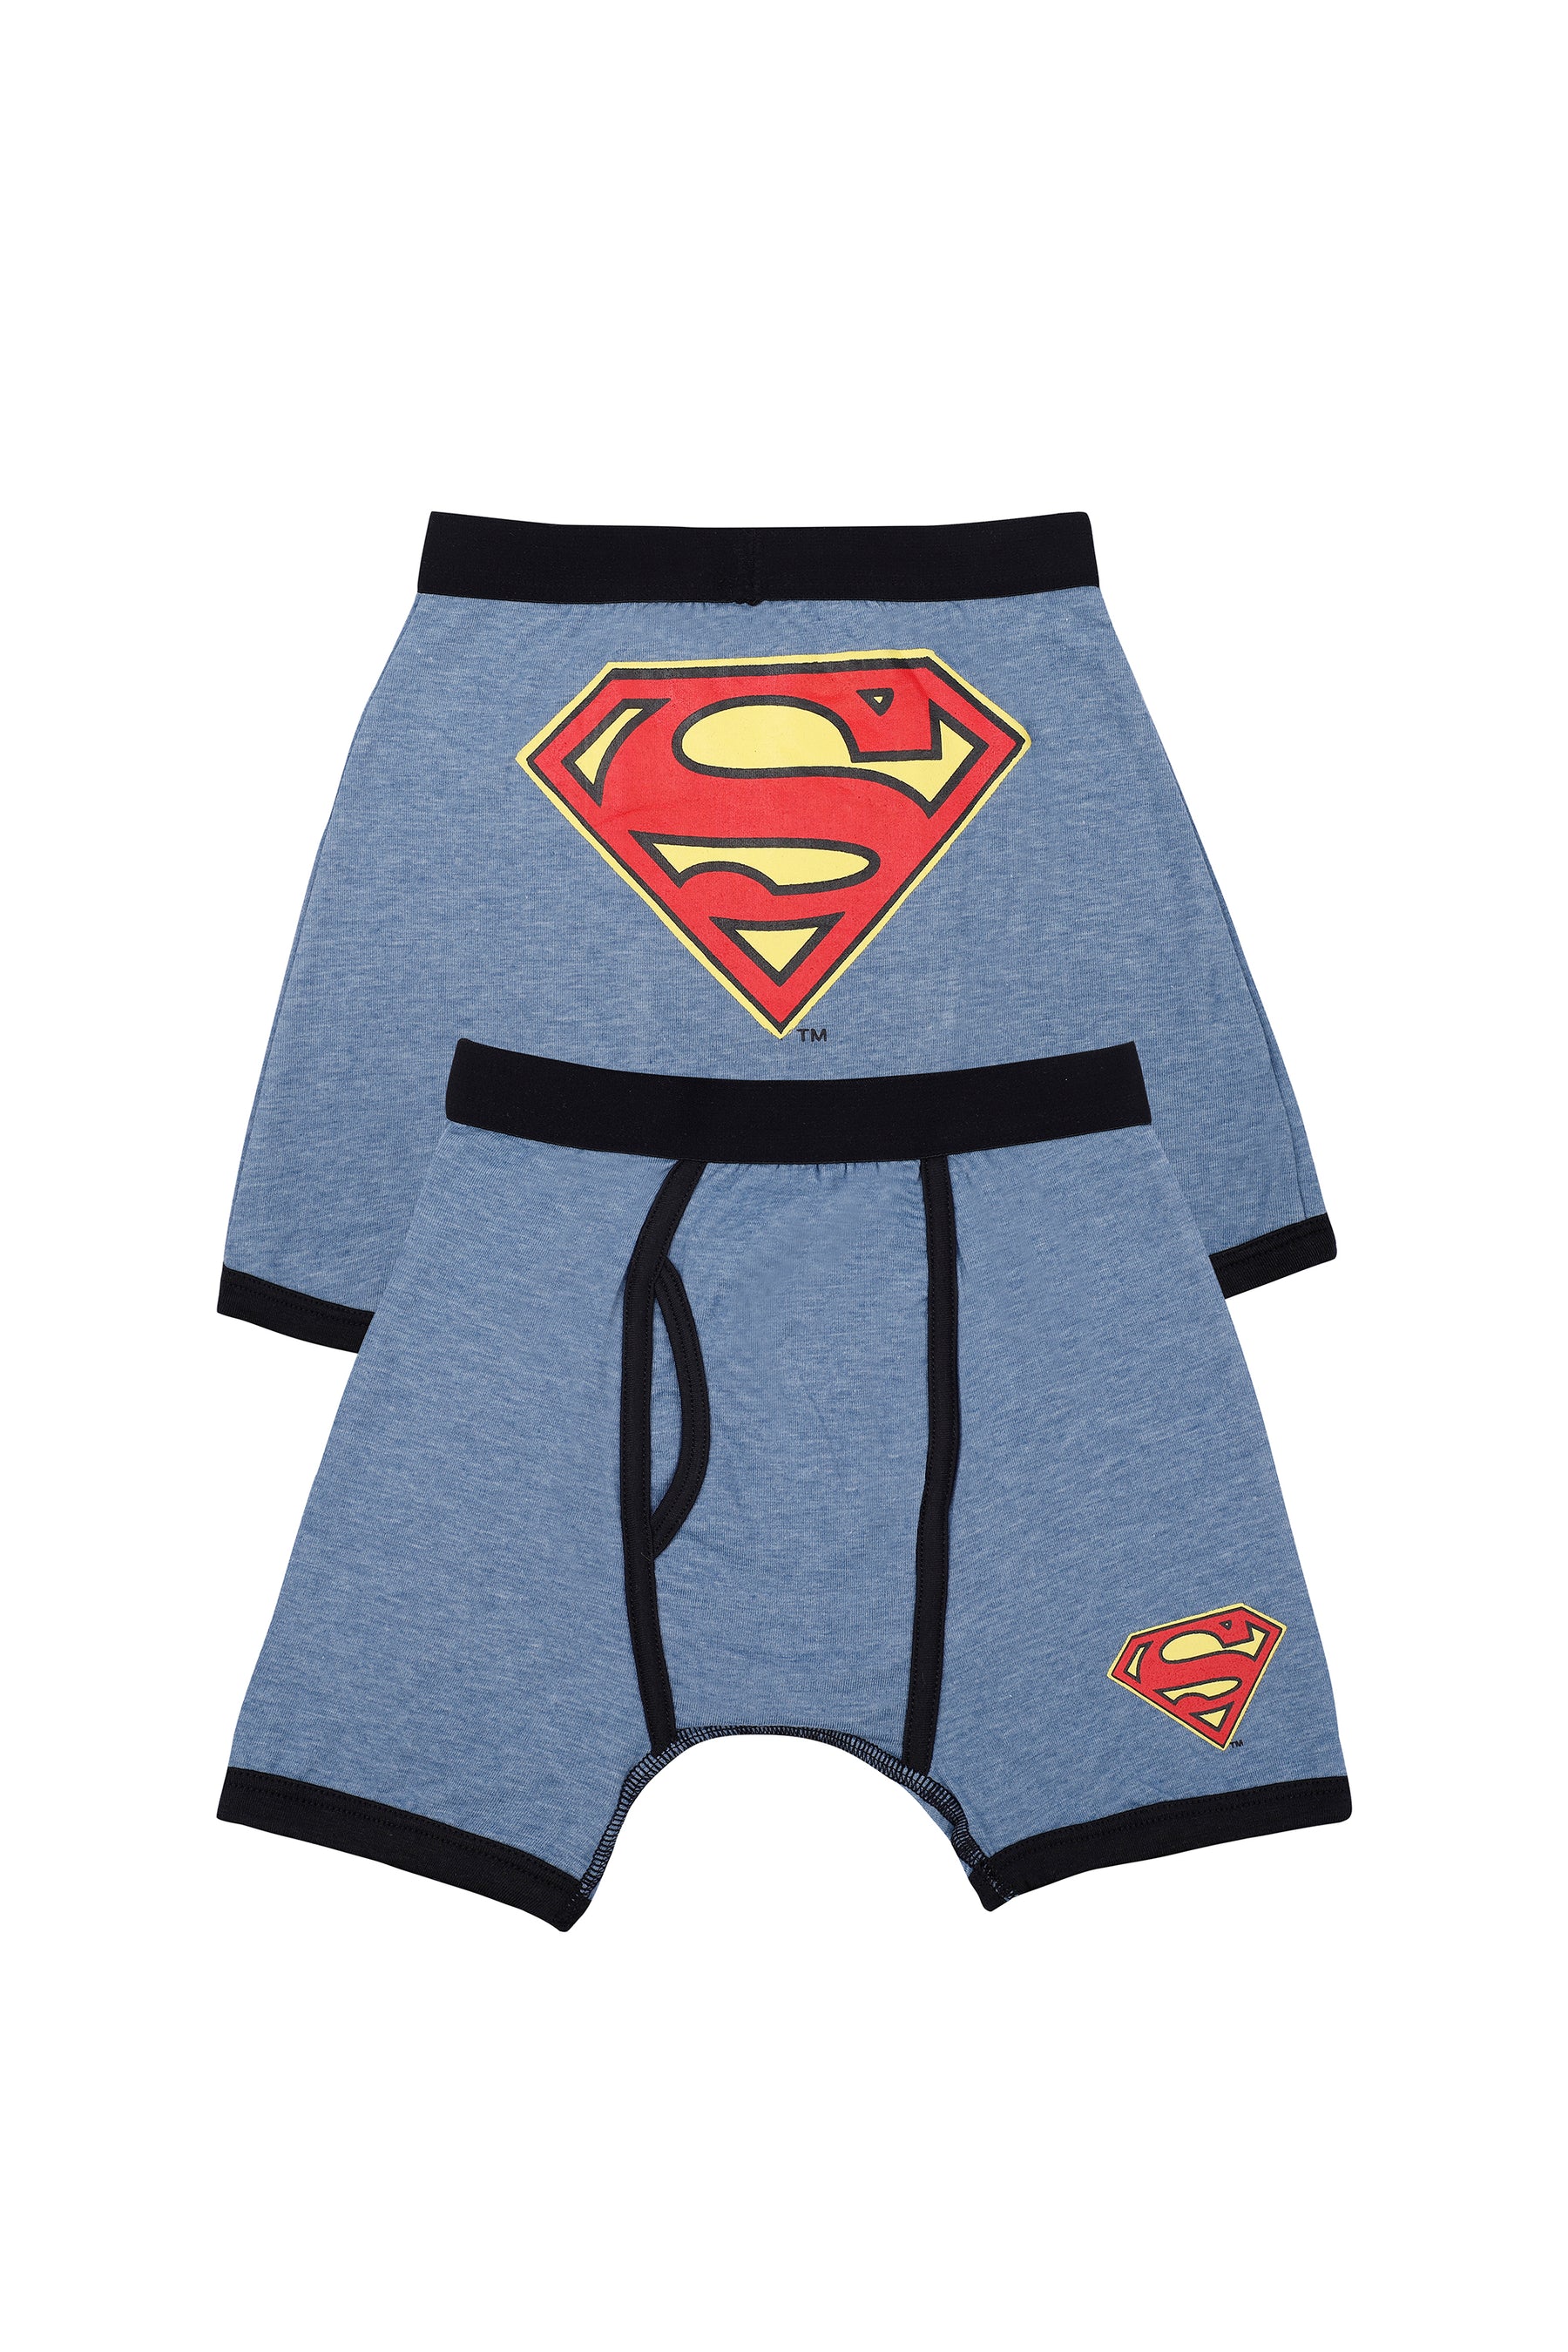 DC Comics Superman Mens Blue Character Underwear Boxers